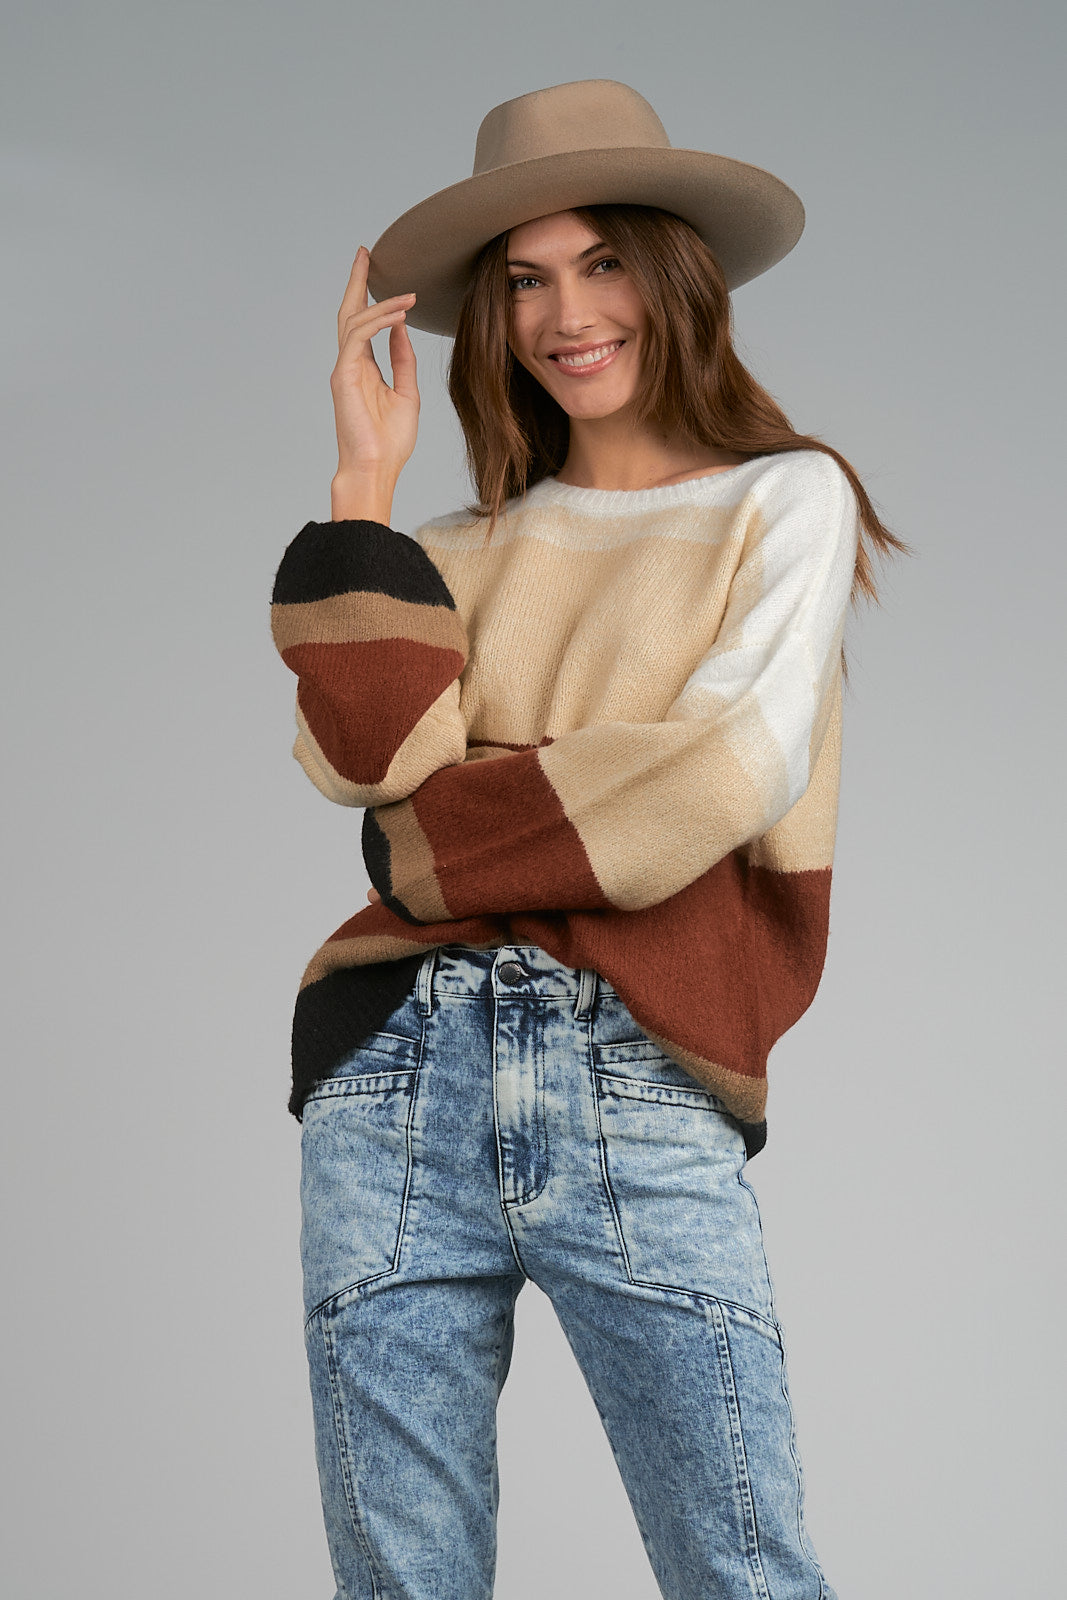 Elan Copper Stripe Crewneck Sweater